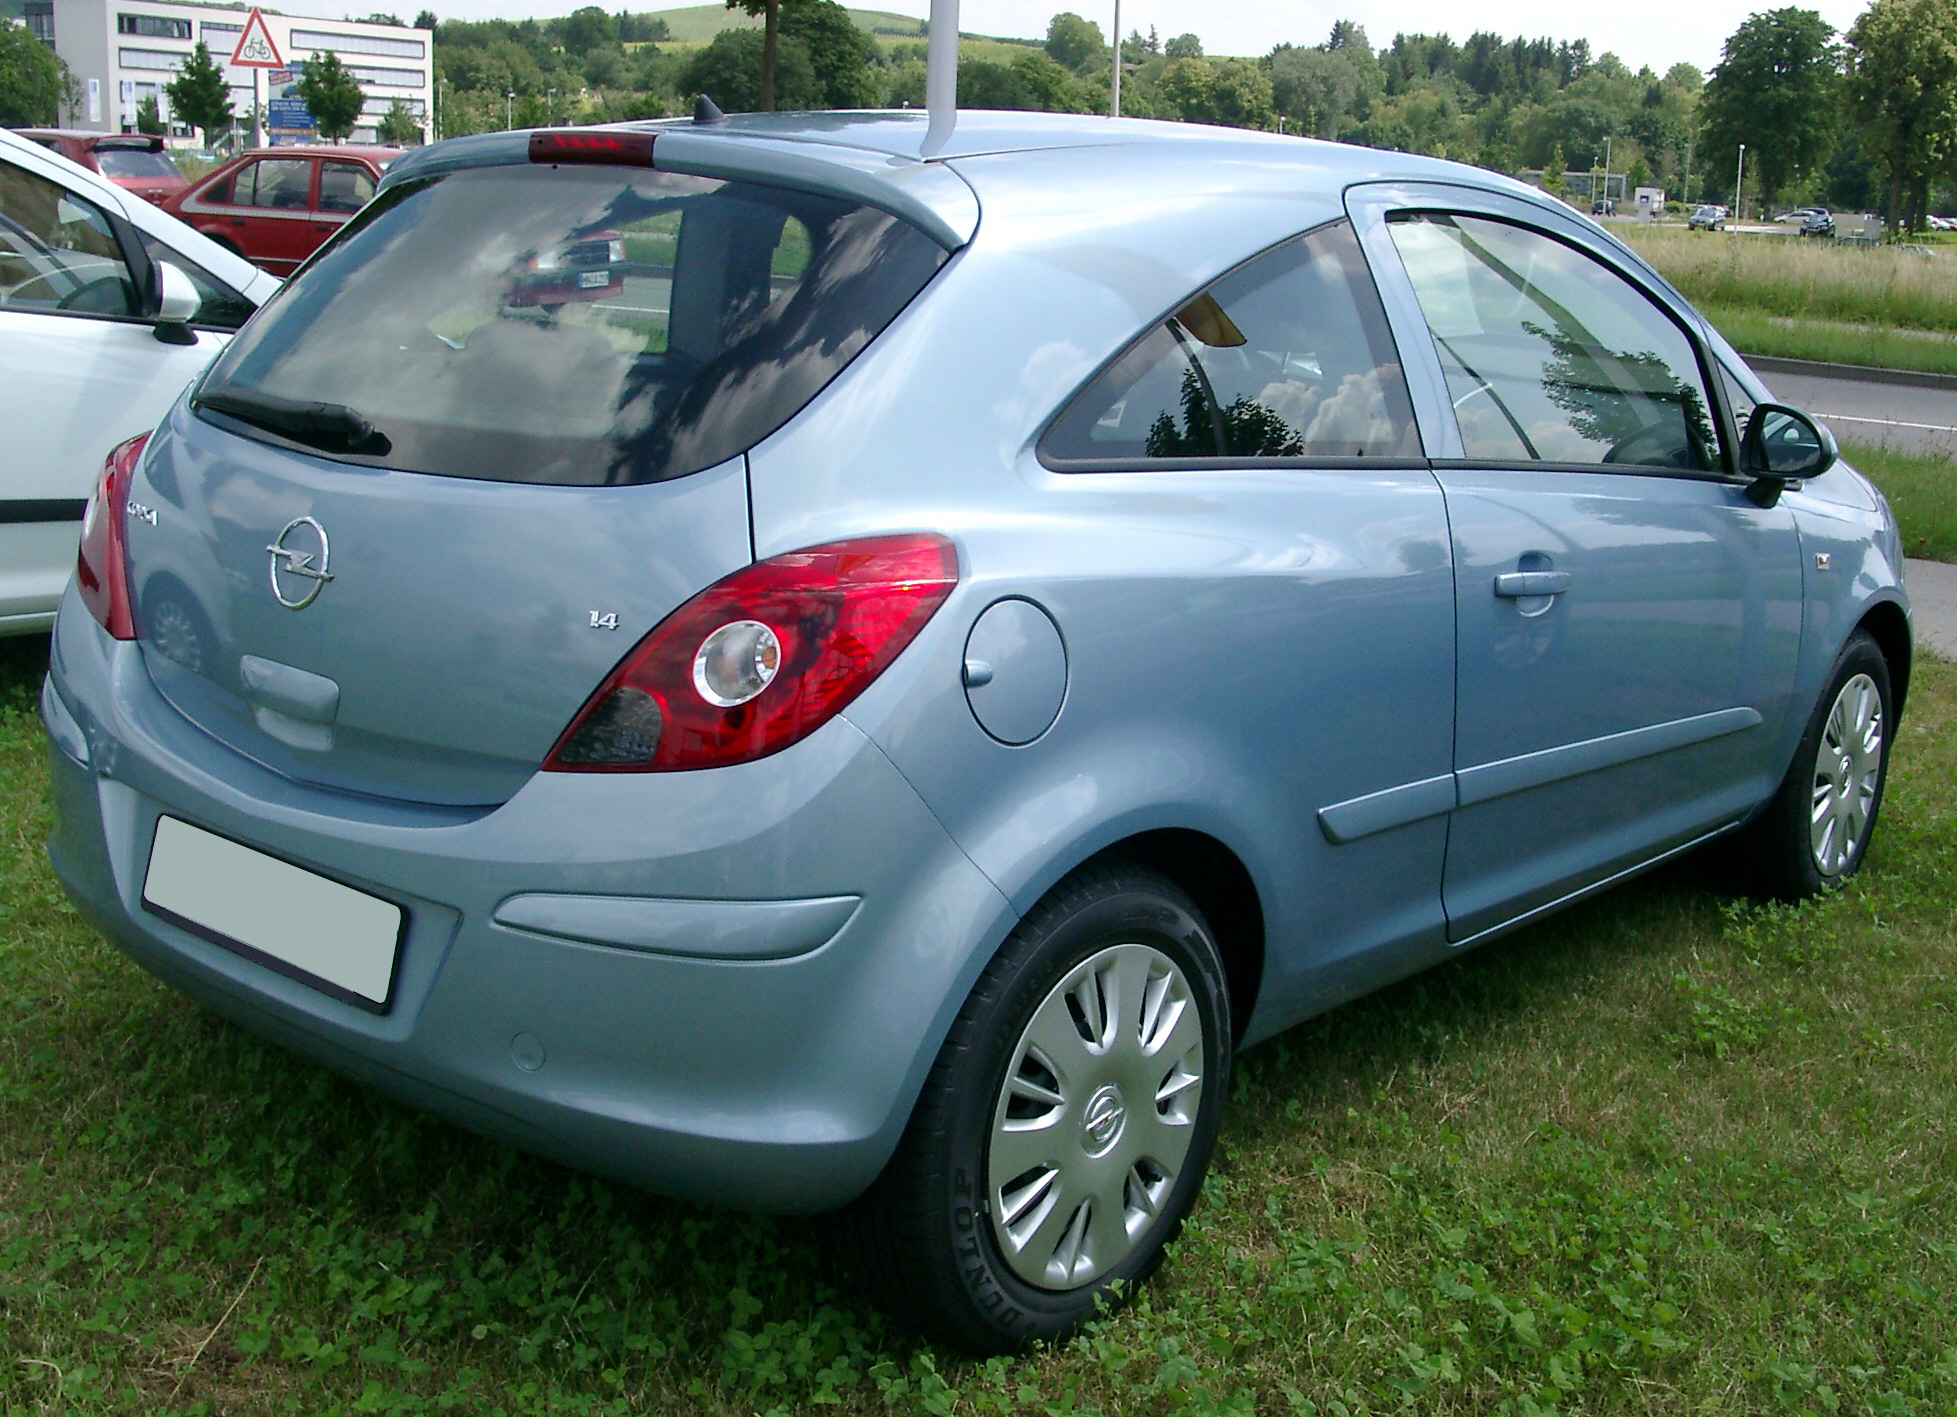 File:Opel Corsa D 1.2 Twinport Edition front 20100602.jpg